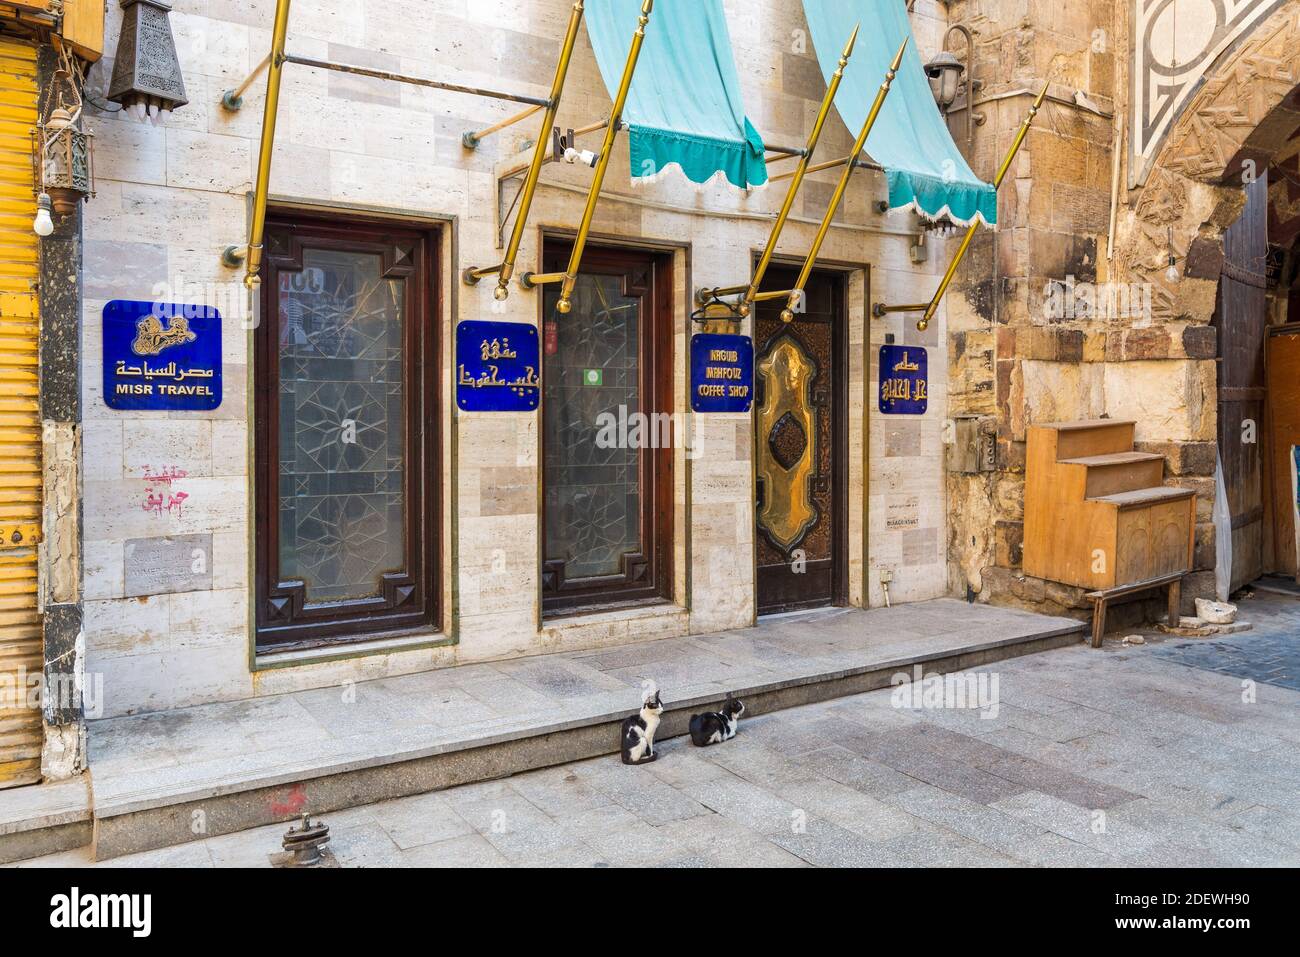 Cairo, Egypt- June 26 2020: Modern famous Naguib Mahfouz coffeehouse, located in historic Mamluk era Khan al-Khalili famous bazaar and souq, closed during coronavirus lockdown Stock Photo